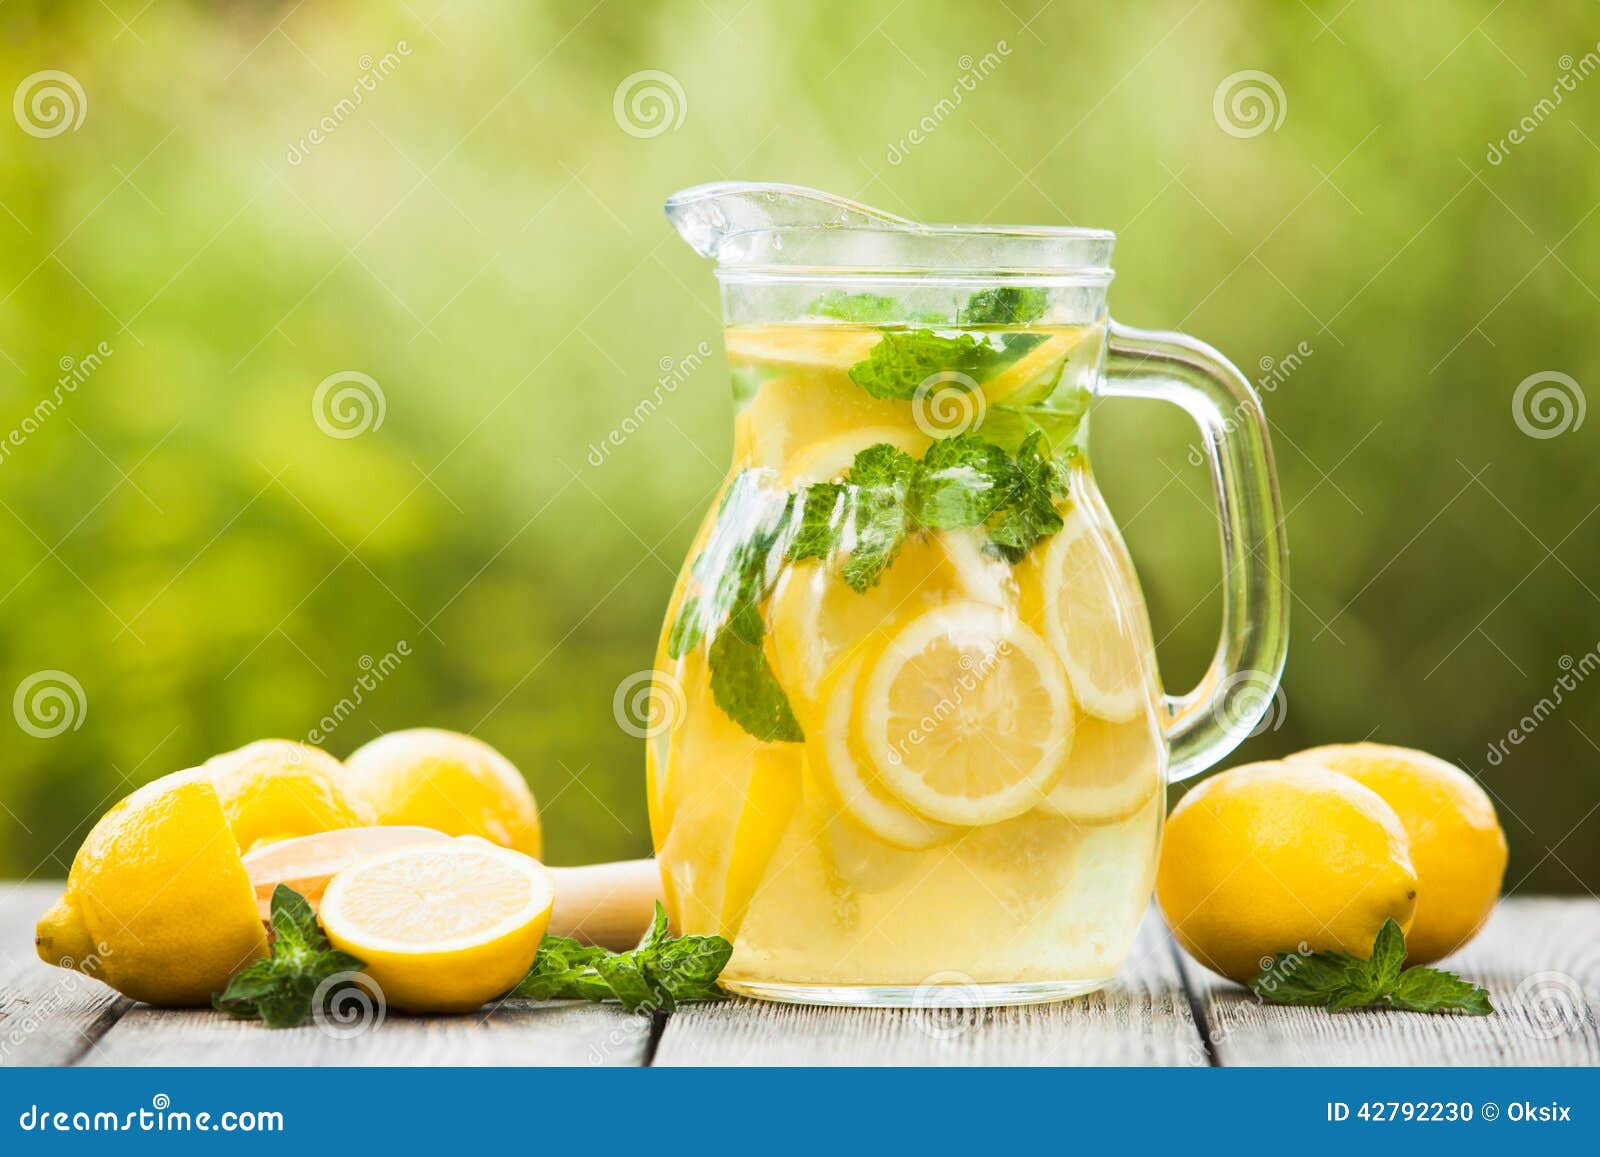 lemonade in the jug